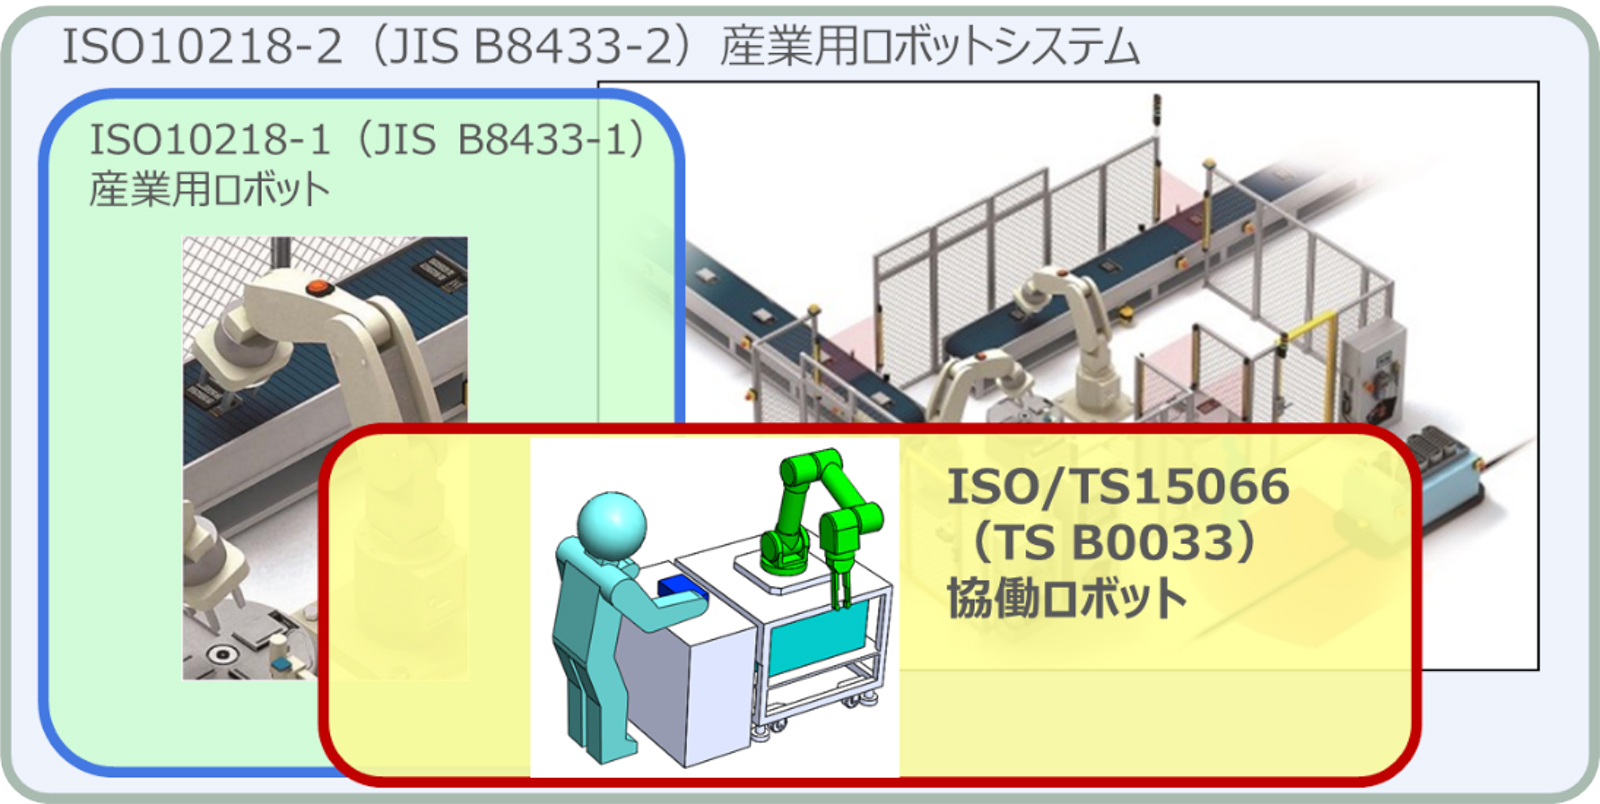 国際規格ISO10218-1